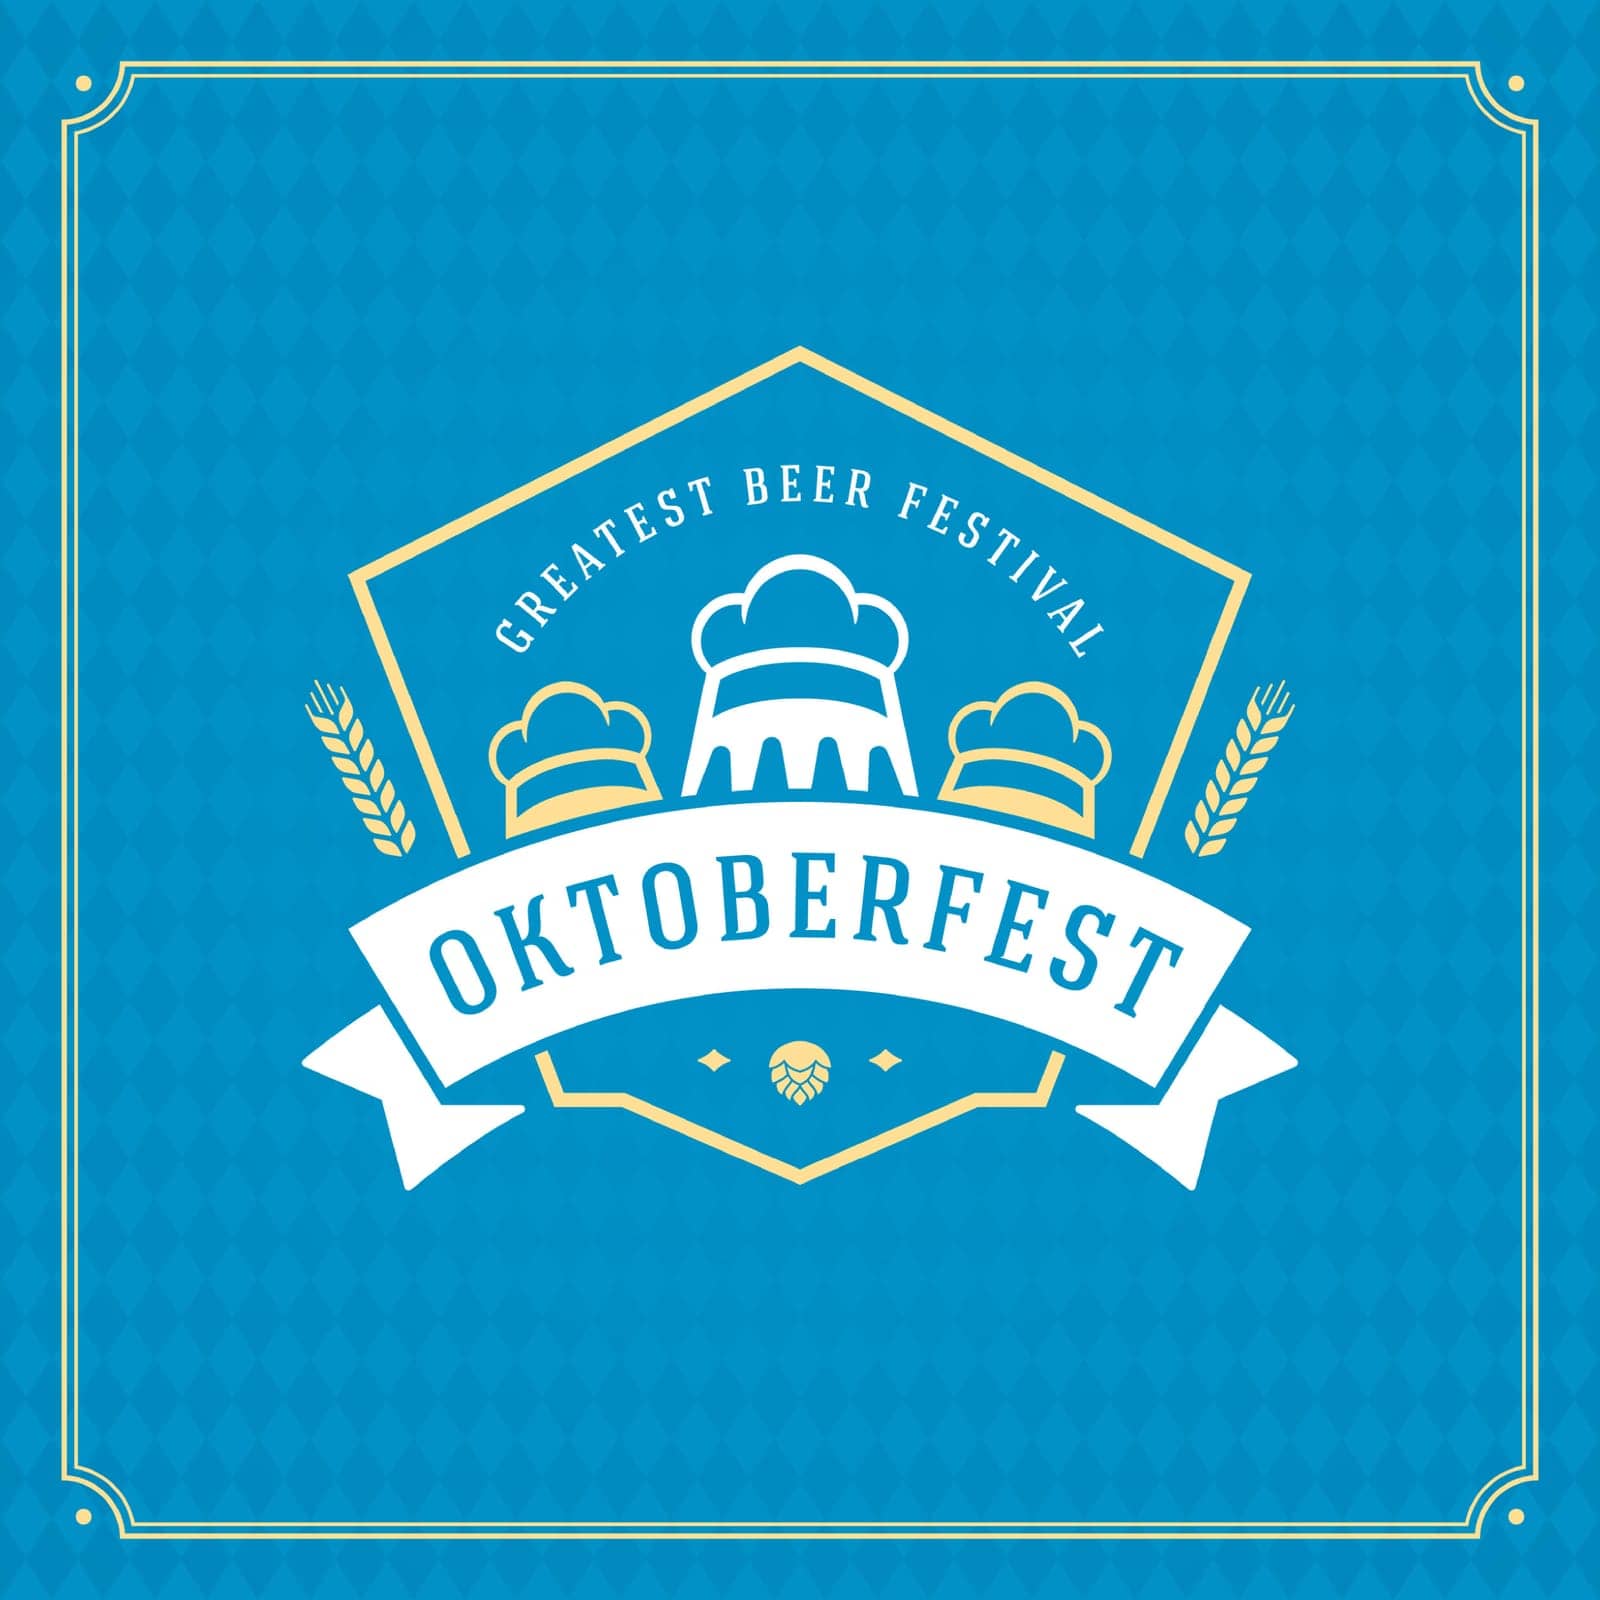 Oktoberfest beer festival celebration vintage greeting card or poster and blue checkered background vector illustration.